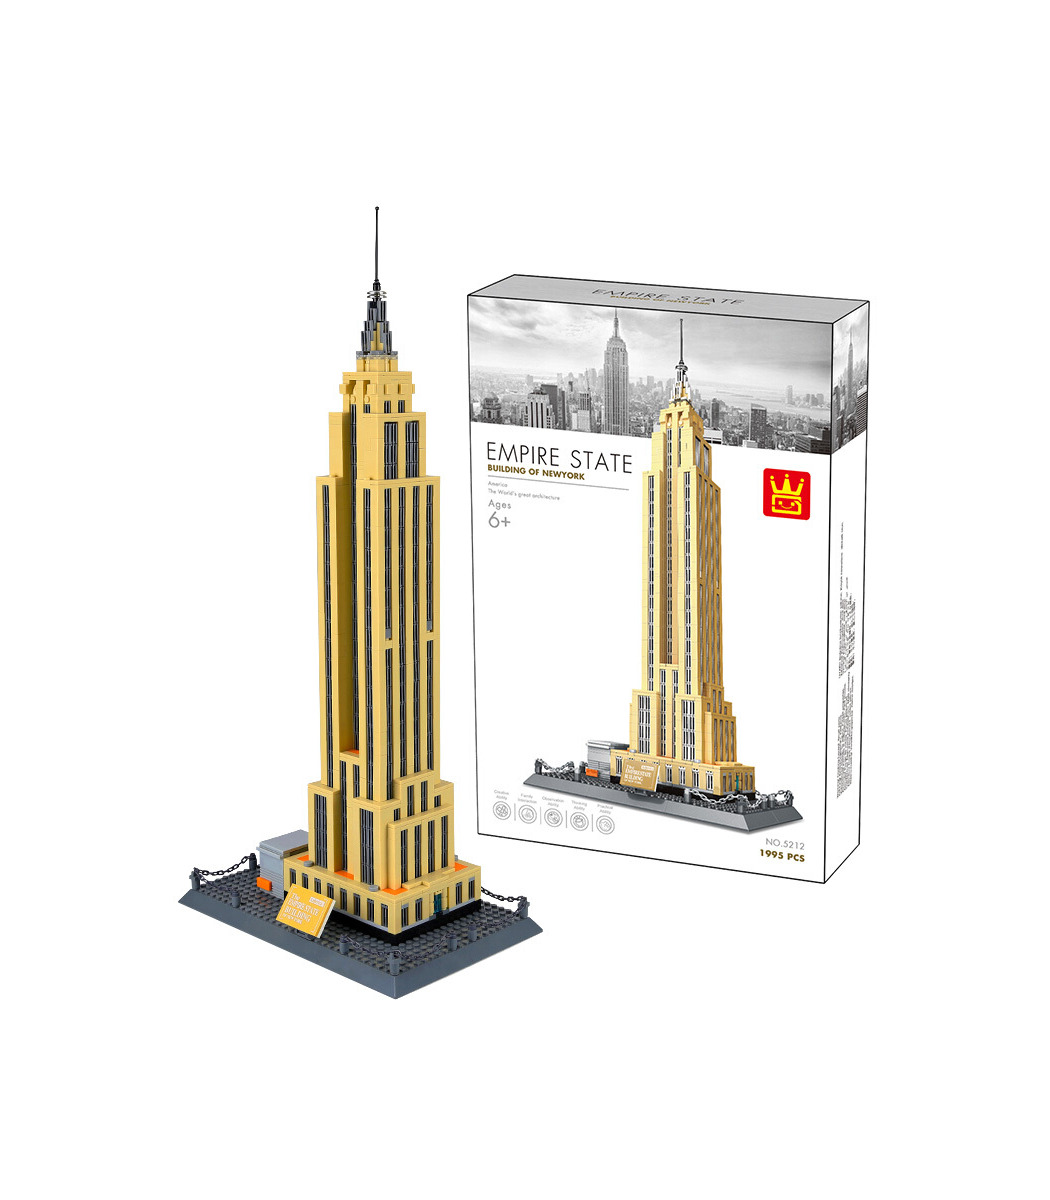 Architecture Empire State Building New York USA Toy Building Blocks Bricks 